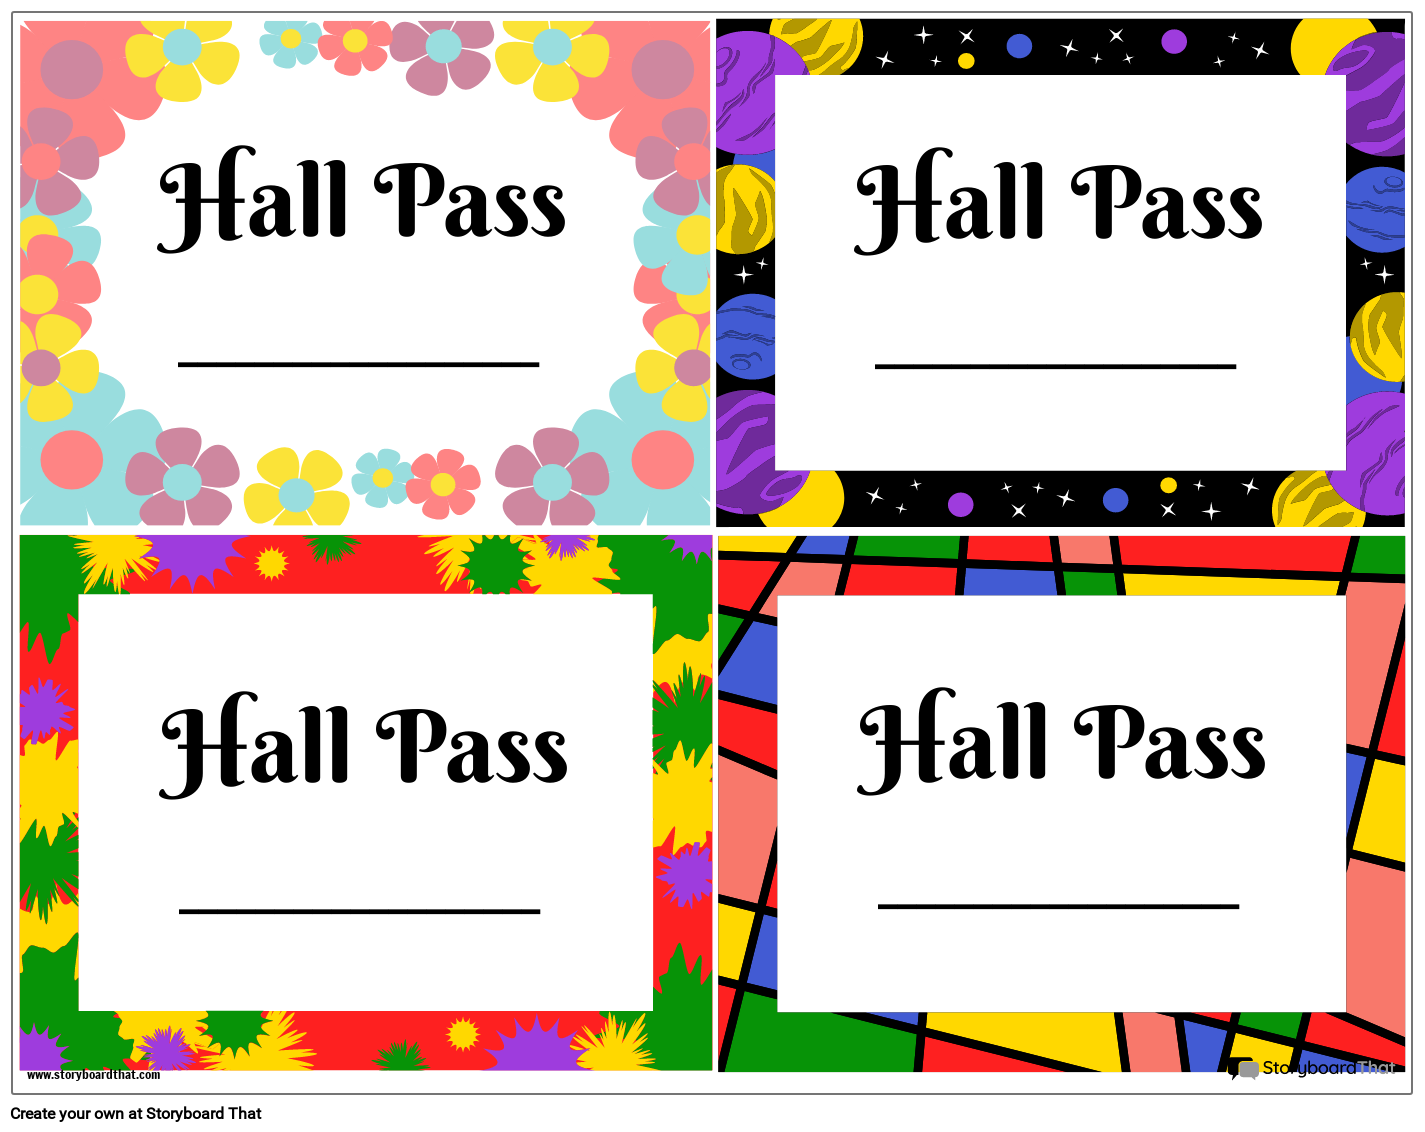 Hall Pass Template — Hall Pass Maker StoryboardThat